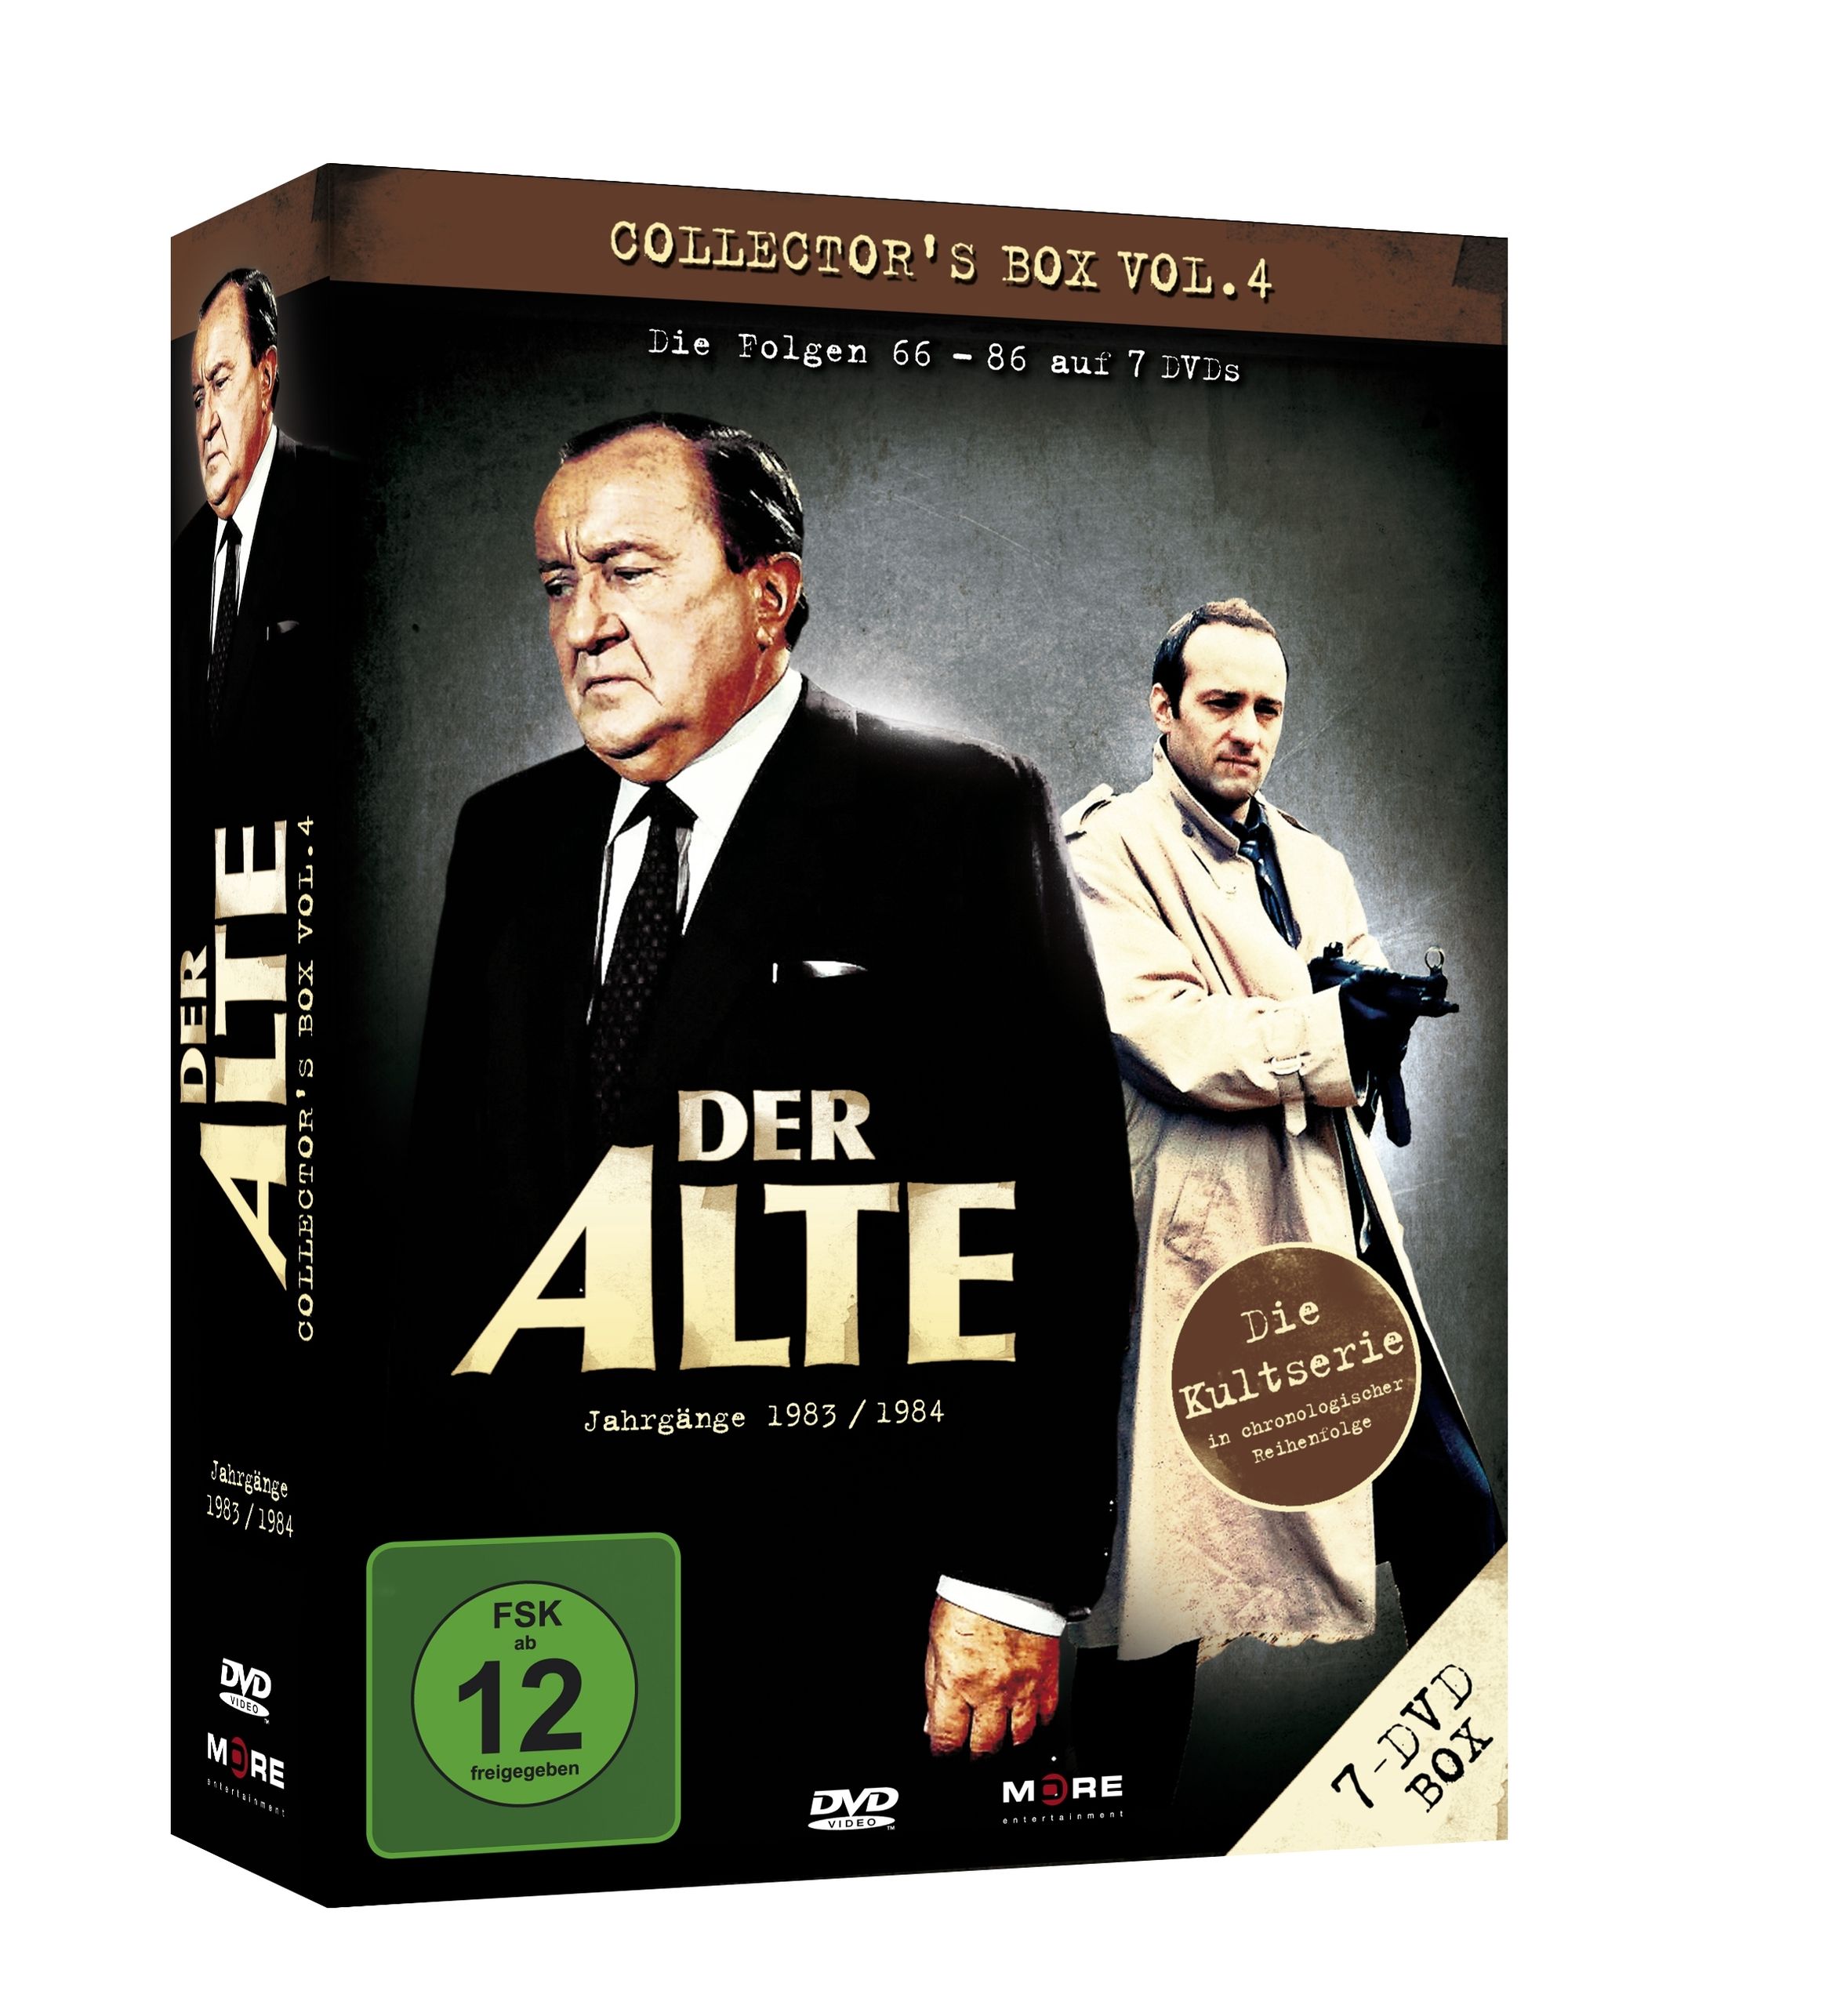 Der Alte - Collector's Box Vol. 4 DVD bei Weltbild.de bestellen